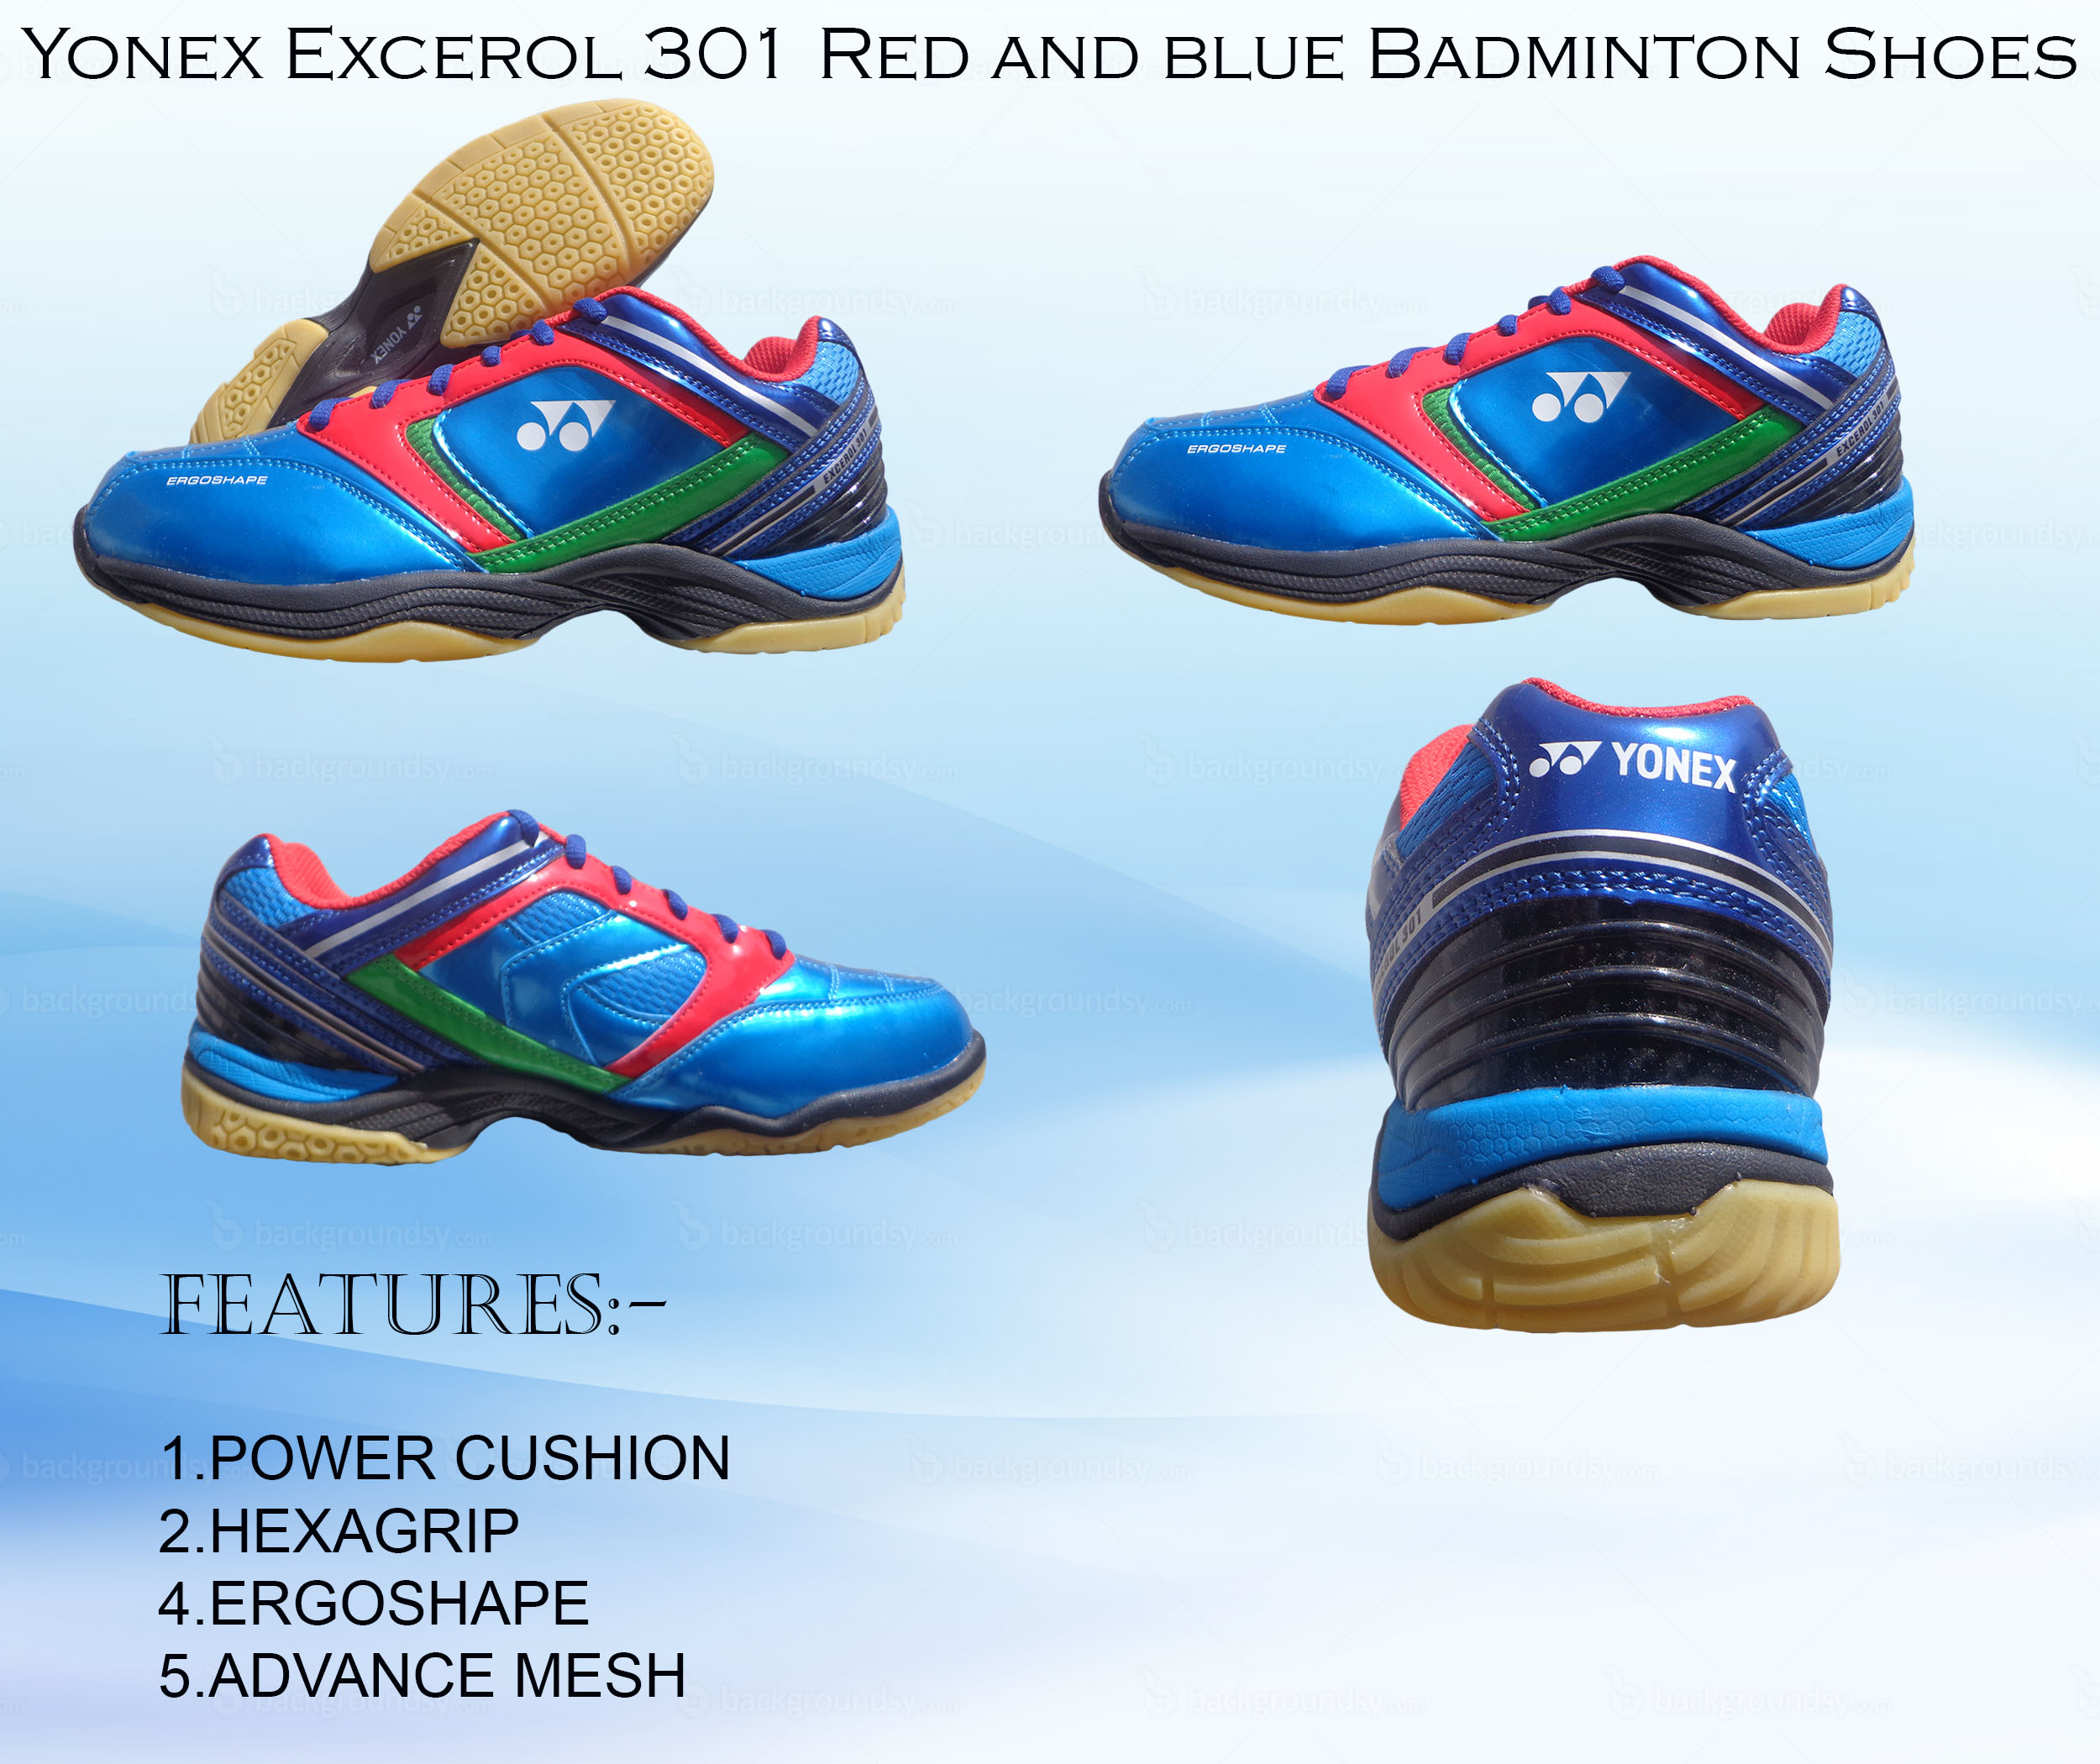 new badminton shoes